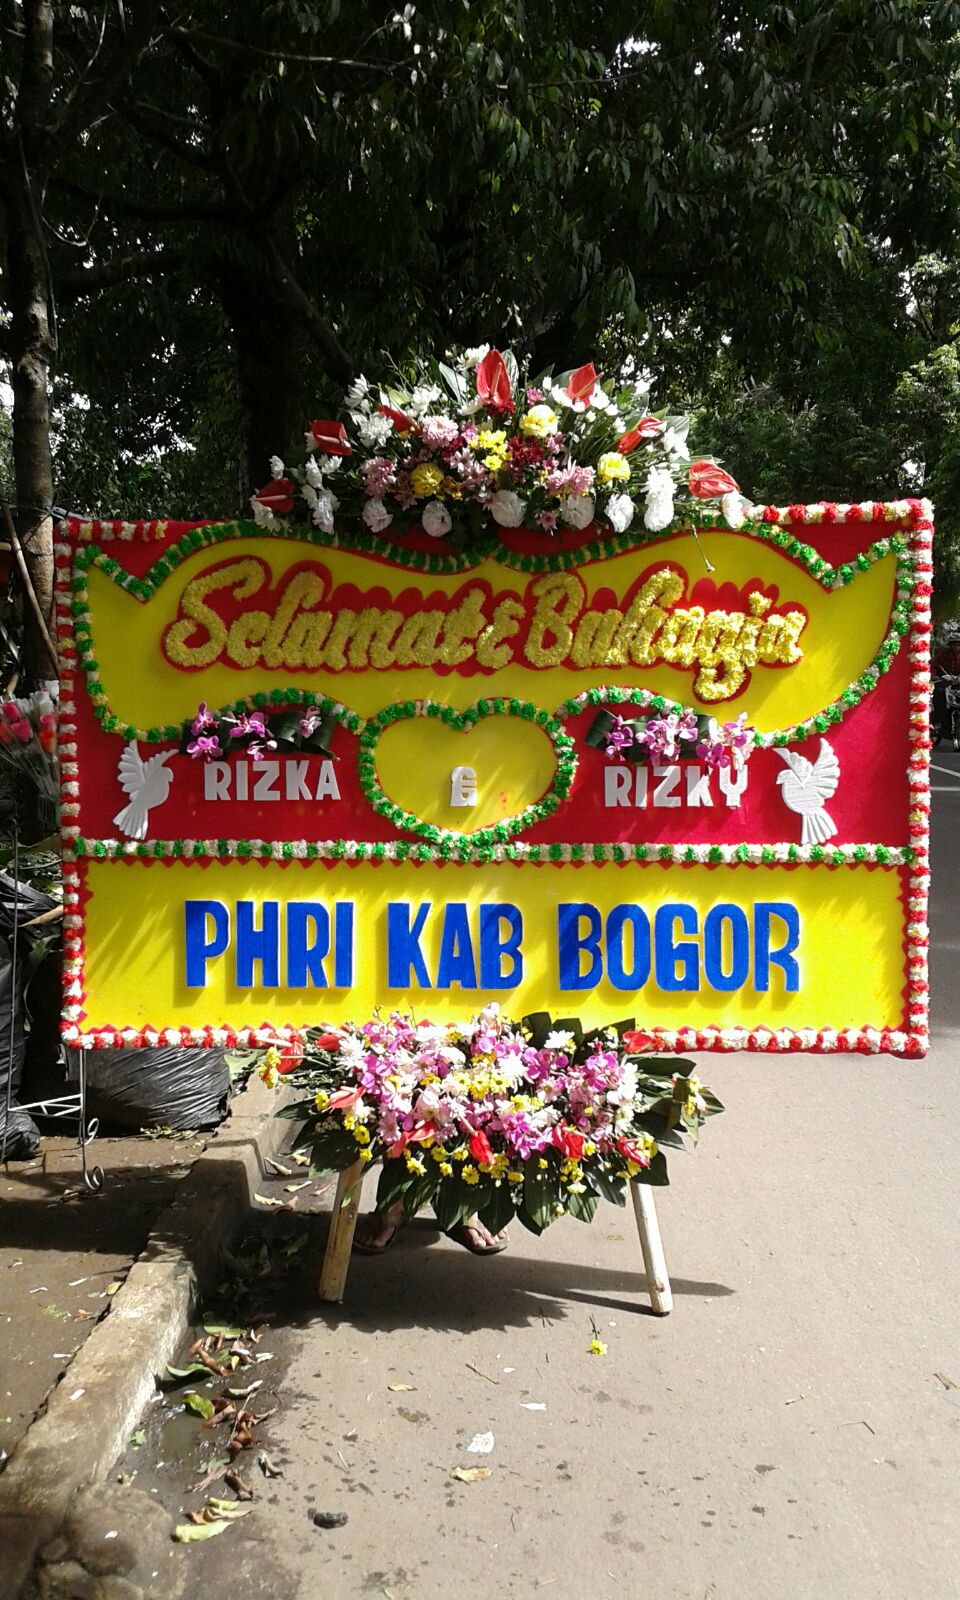 Ajat Florist merupakan salah satu toko bunga (florist) online murah berkualitas, jangkauan Jakarta, Bogor,Depok, Tangerang, Bekasi, Sukabumi, Cibinong dan daerah-daerah sekitarnya